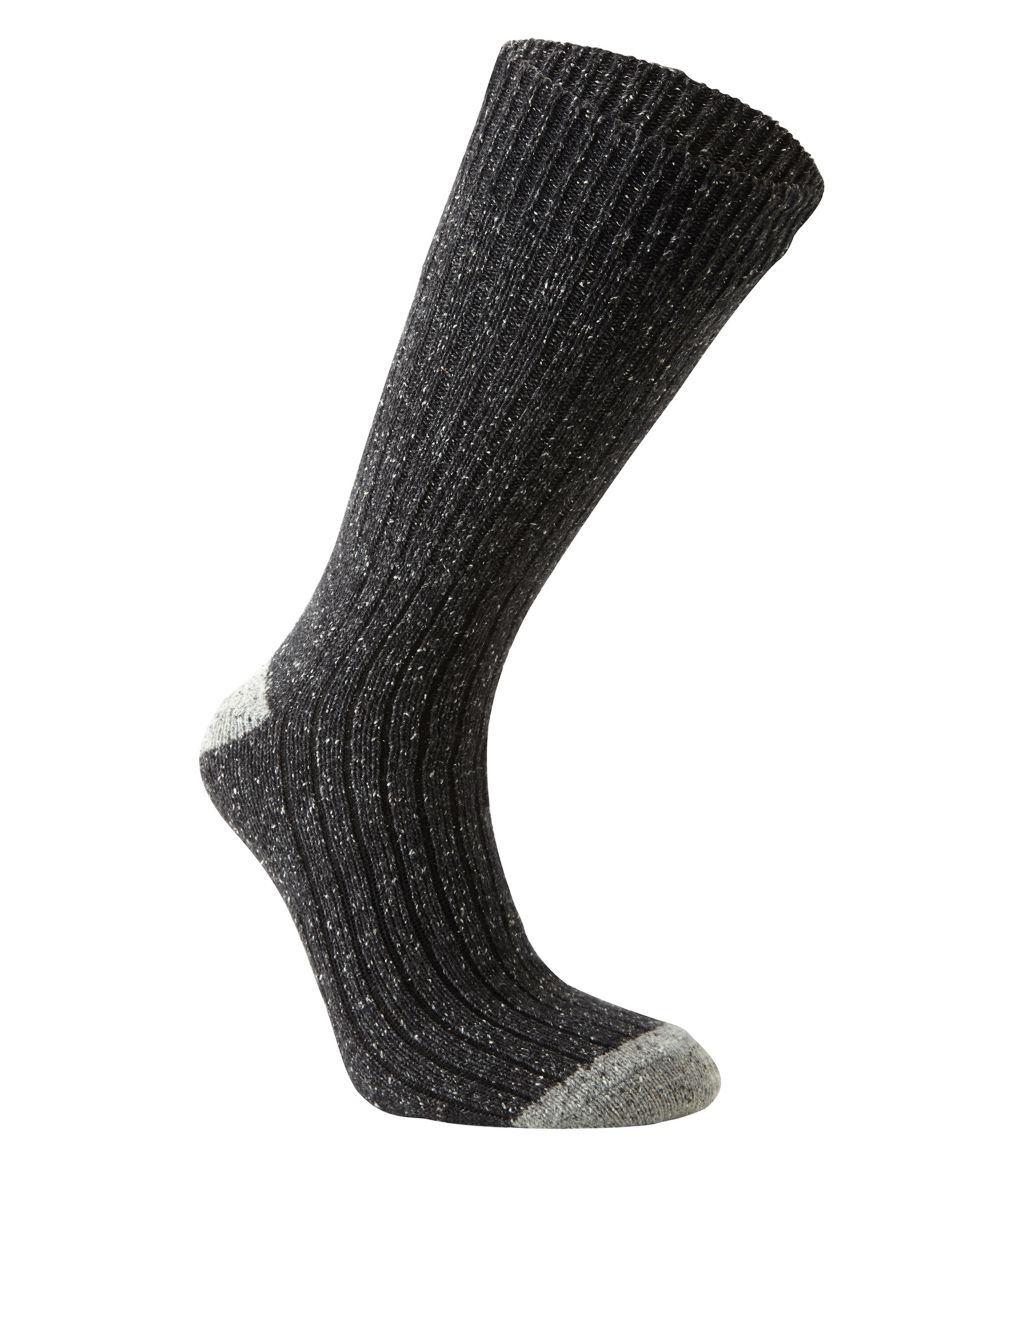 Wool Walking Socks image 1